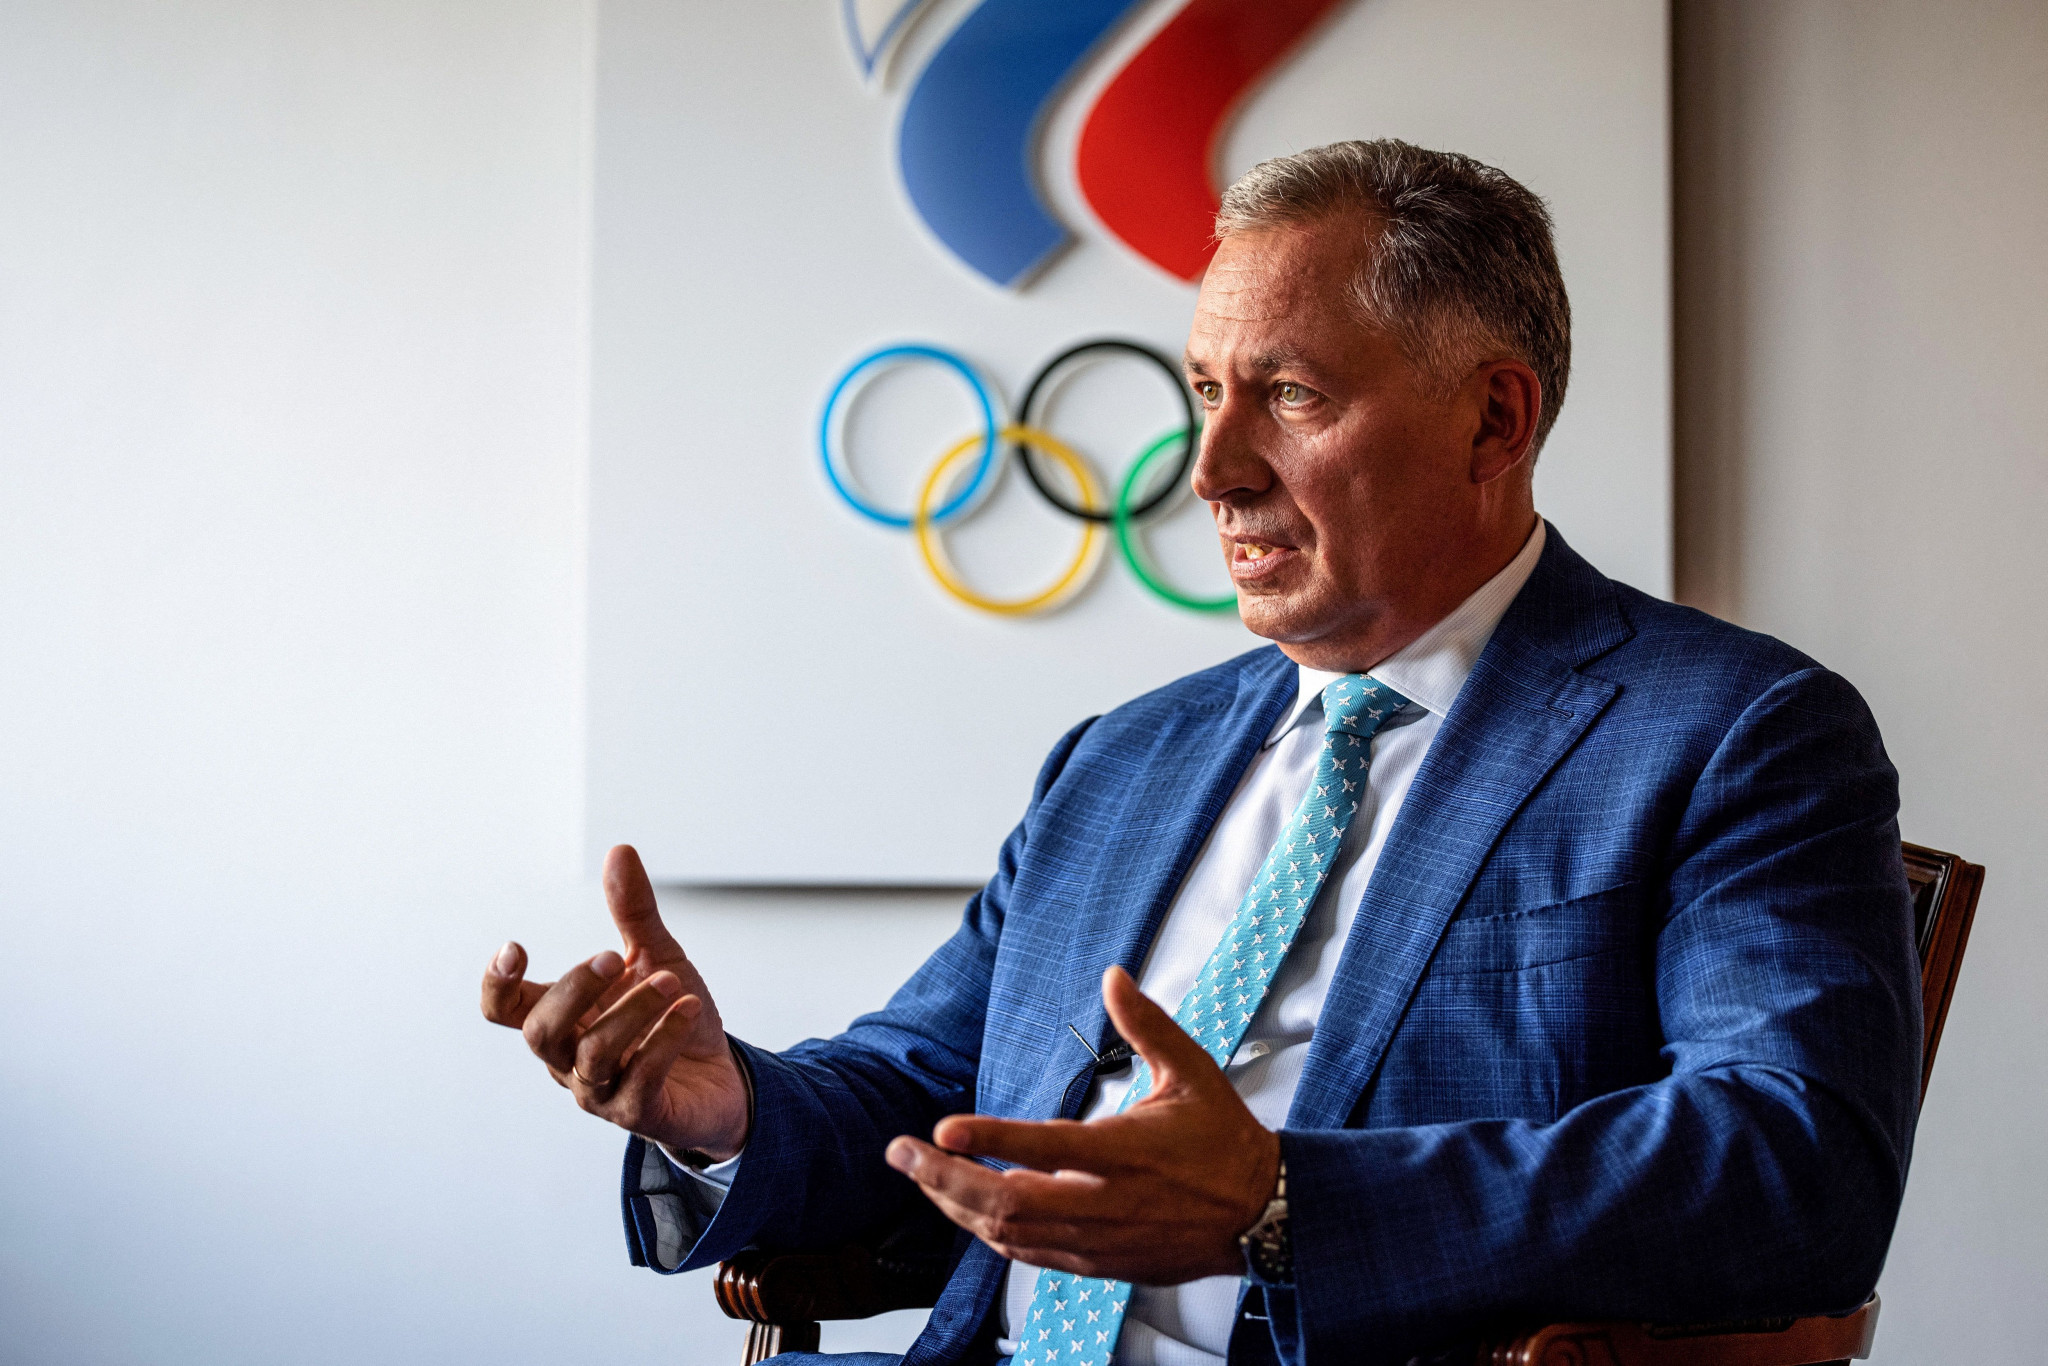 ROC President Pozdnyakov reiterates concerns as athletes miss Beijing 2022 qualifiers in United States